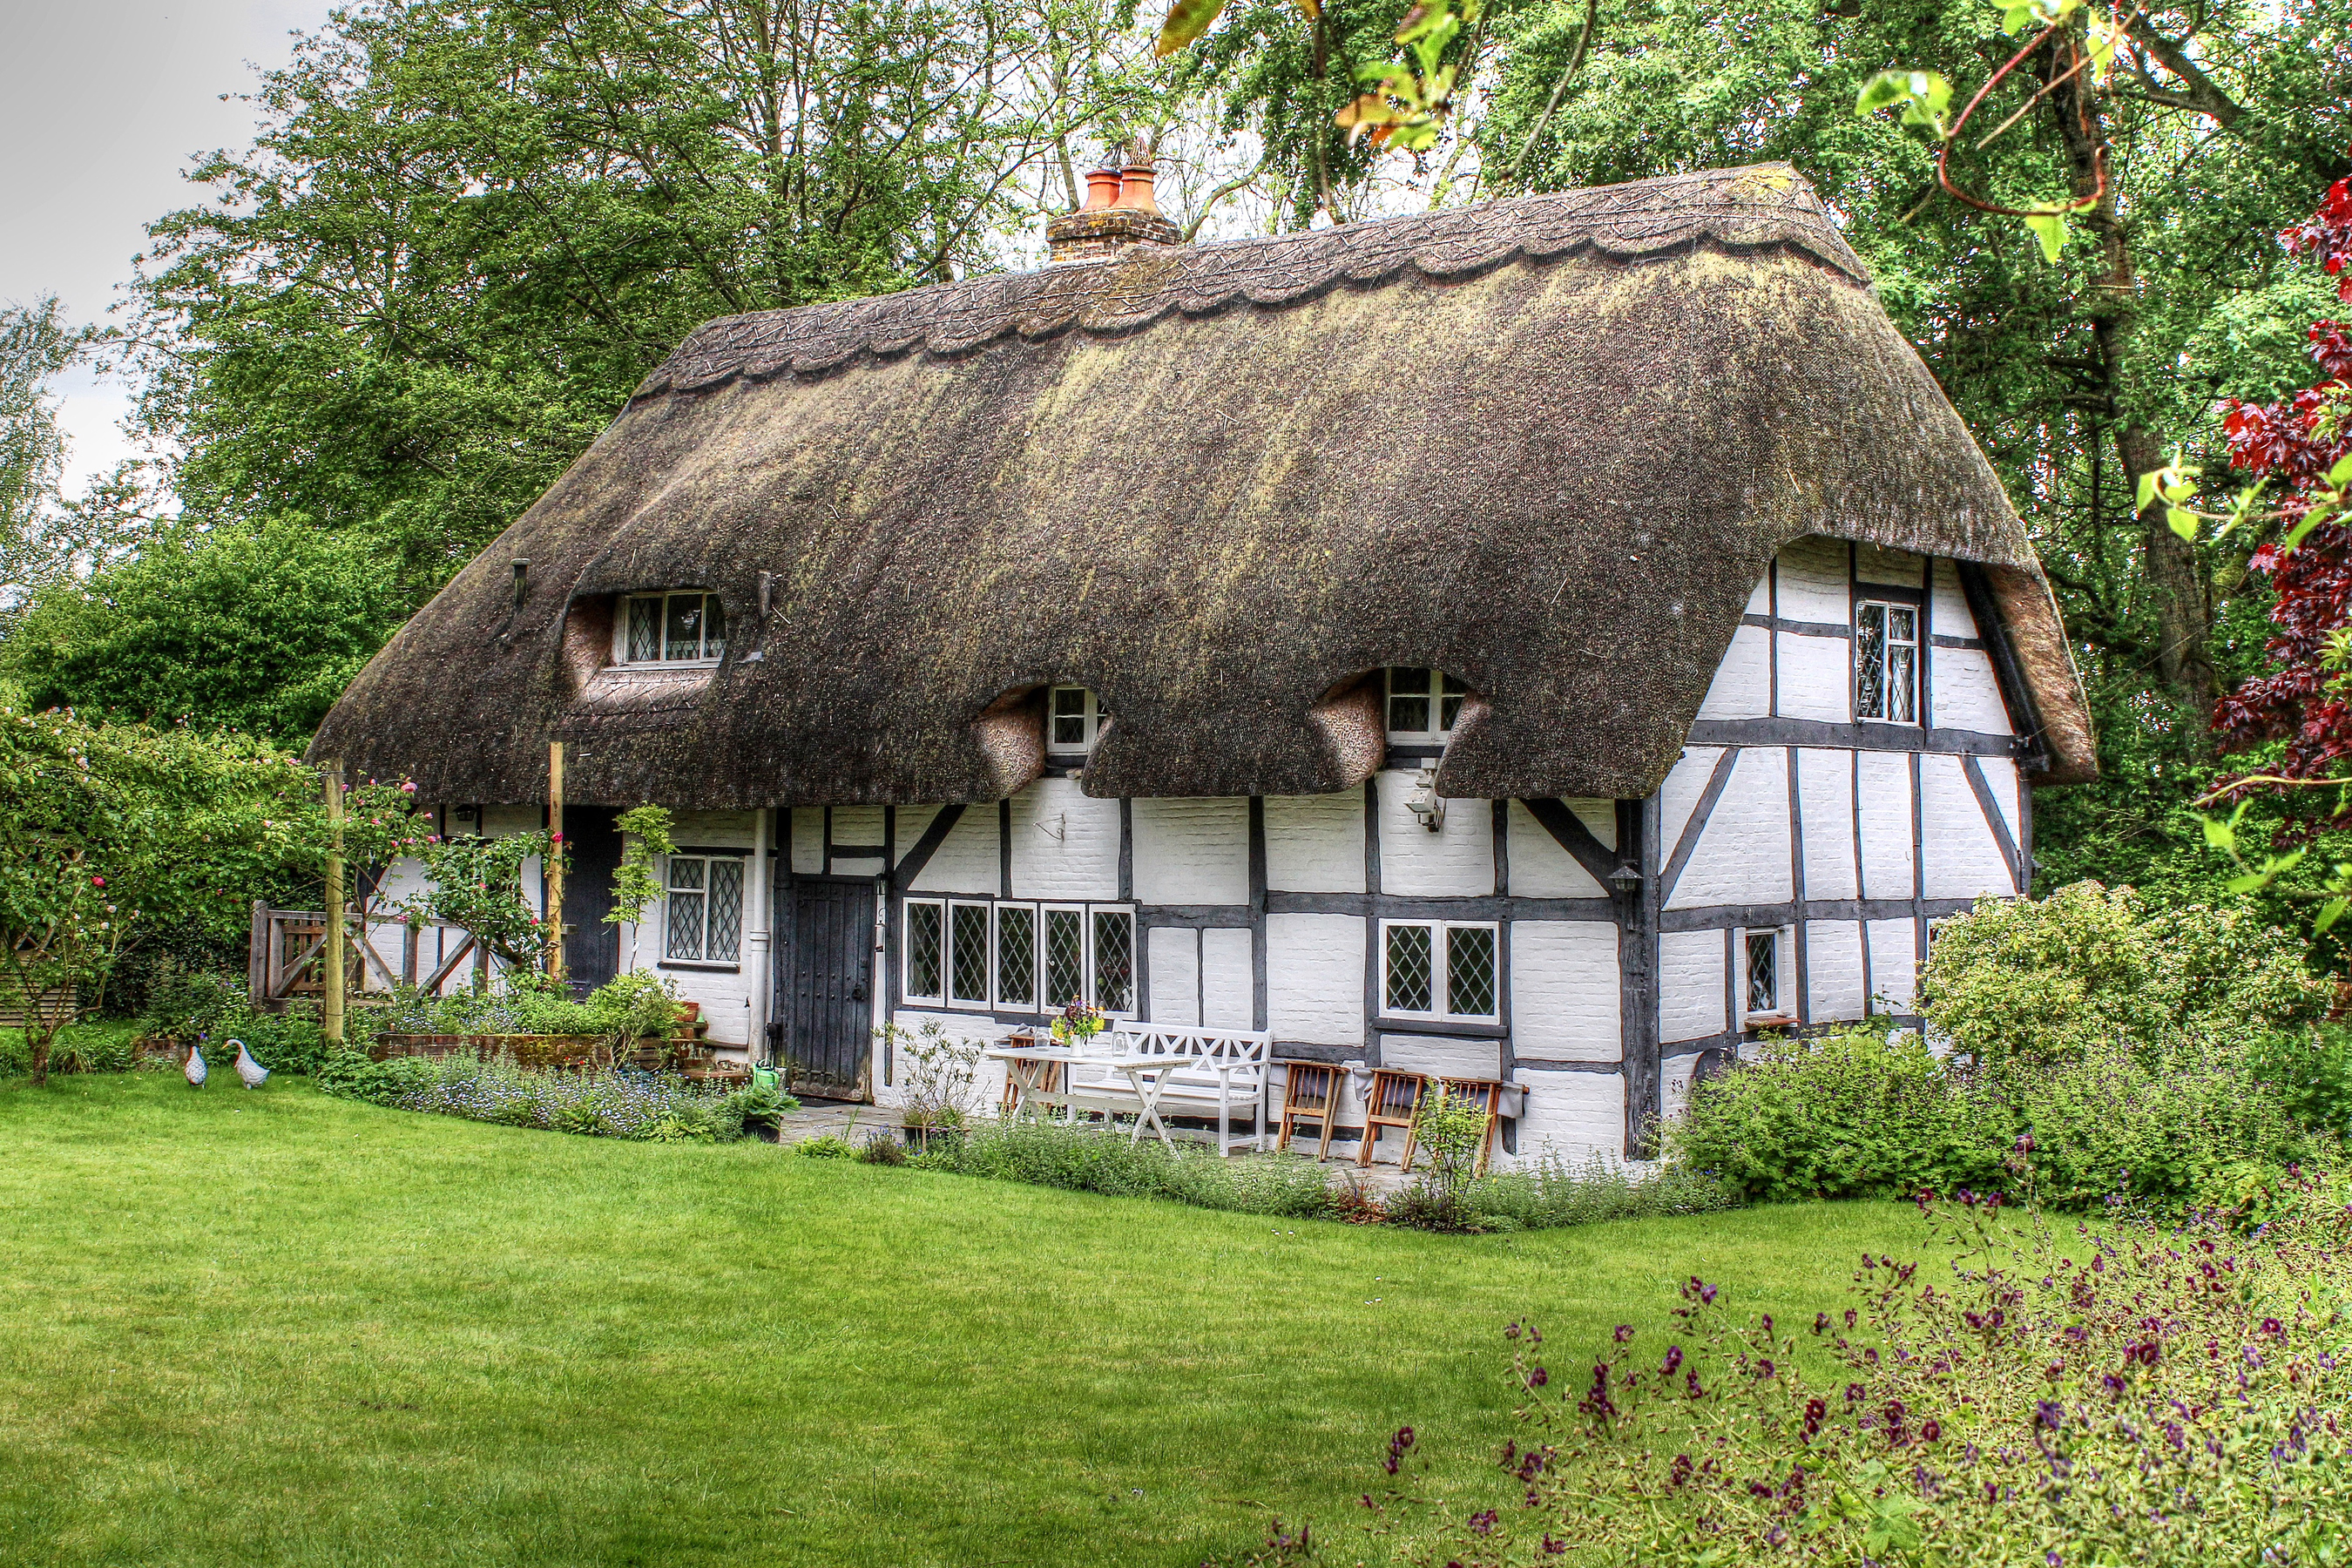 Хата 7 букв. Thatched Cottage in Hampshire England. Традиционное жилище венгров. Фахверк Мазанка. Мазанки домики.